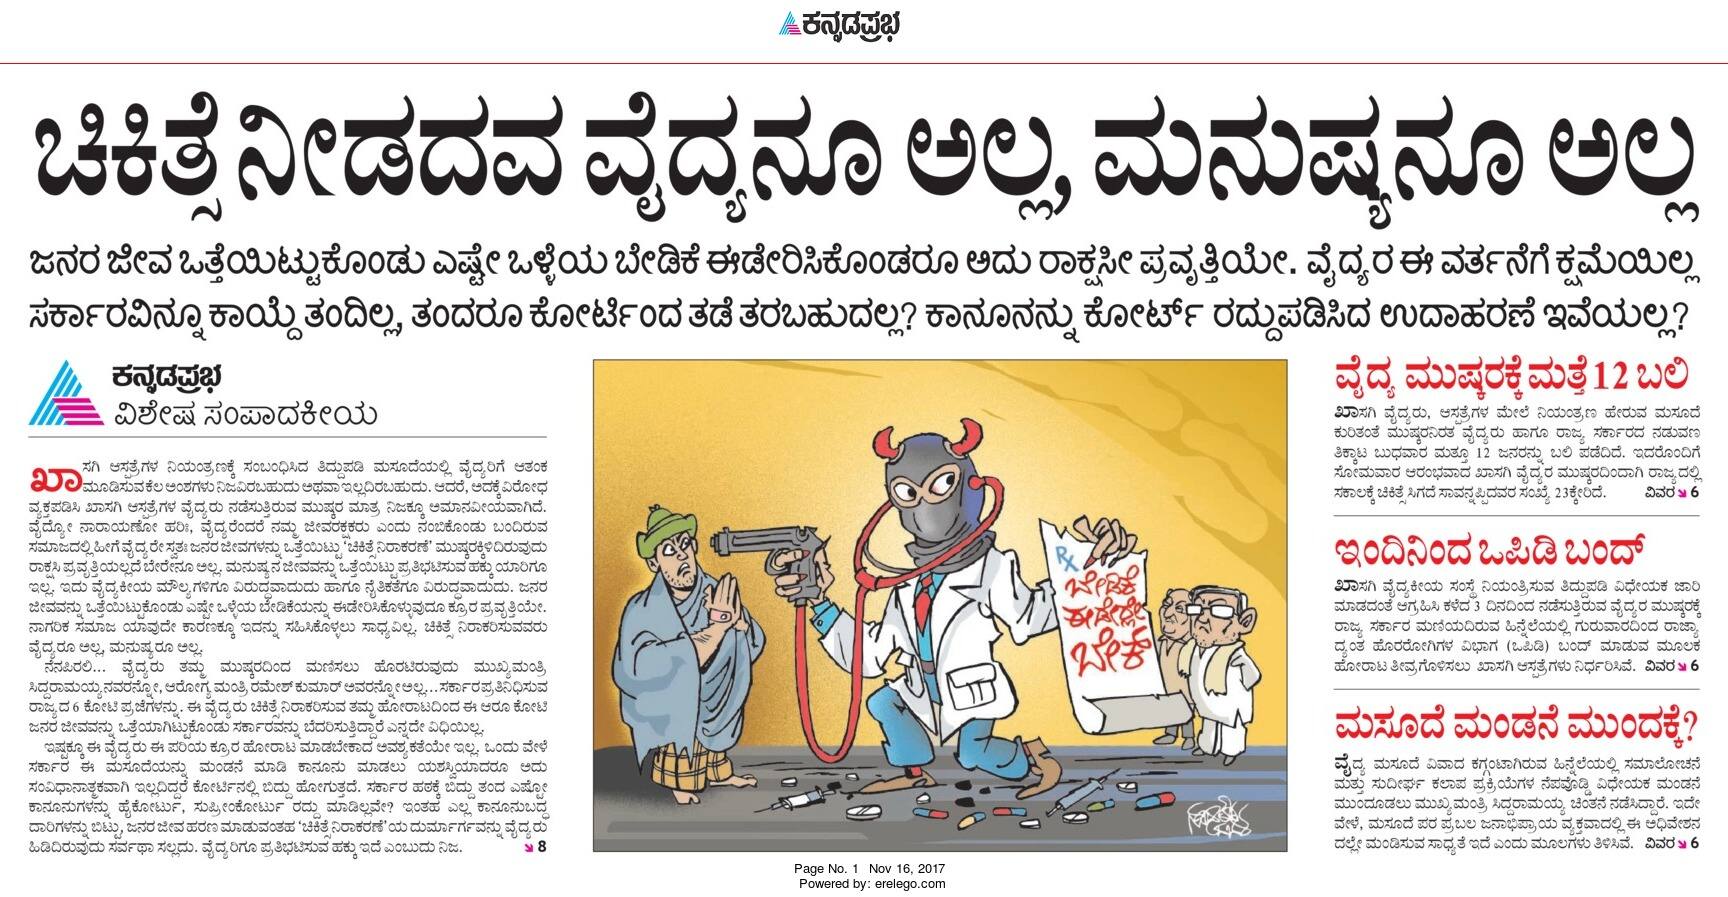 Kannadaprabha Editorial on Doctors Strike Gets Praises